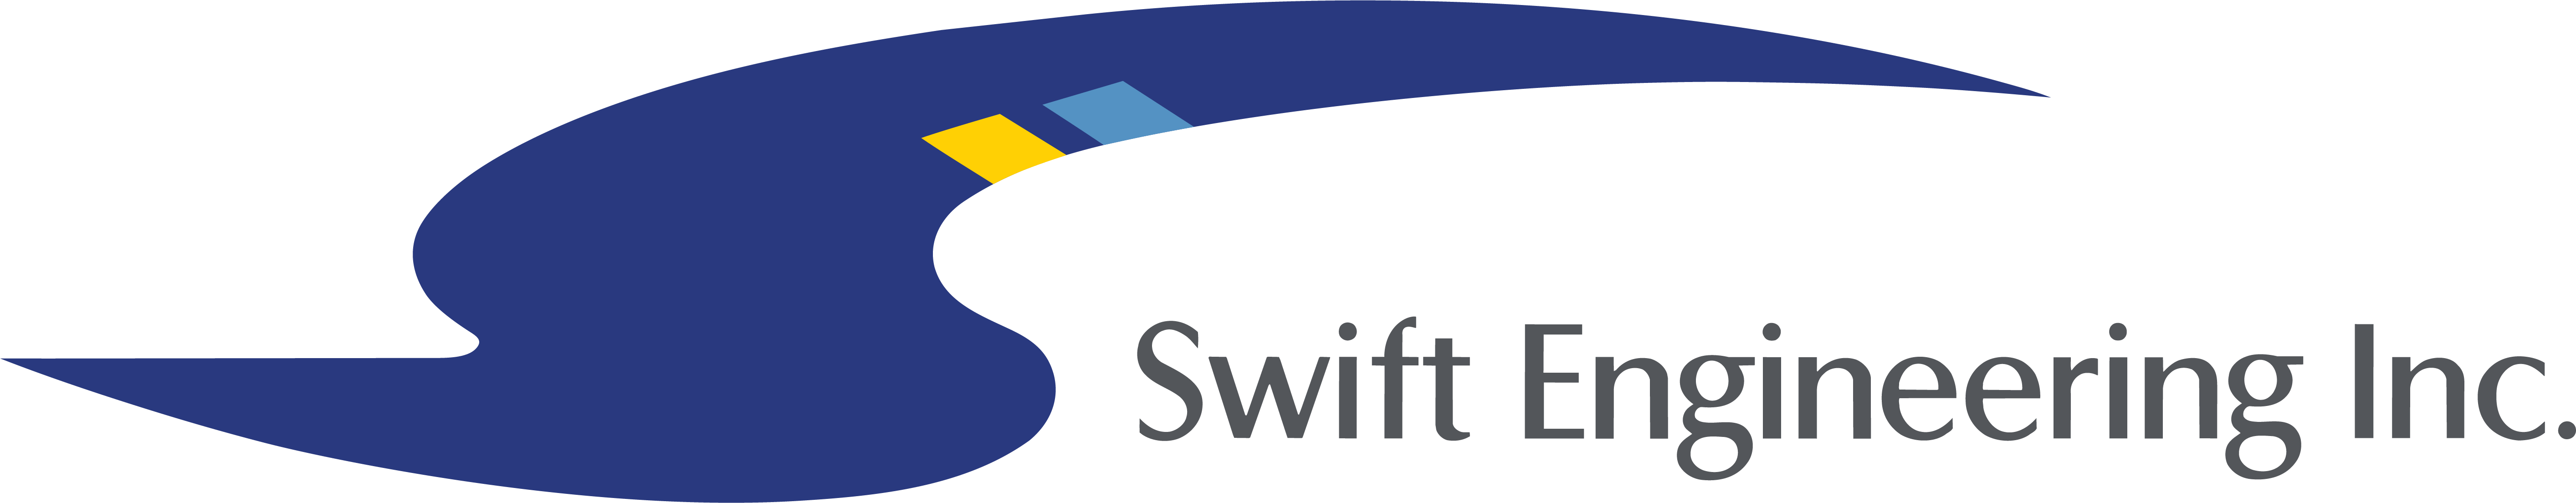 Swift Engineering